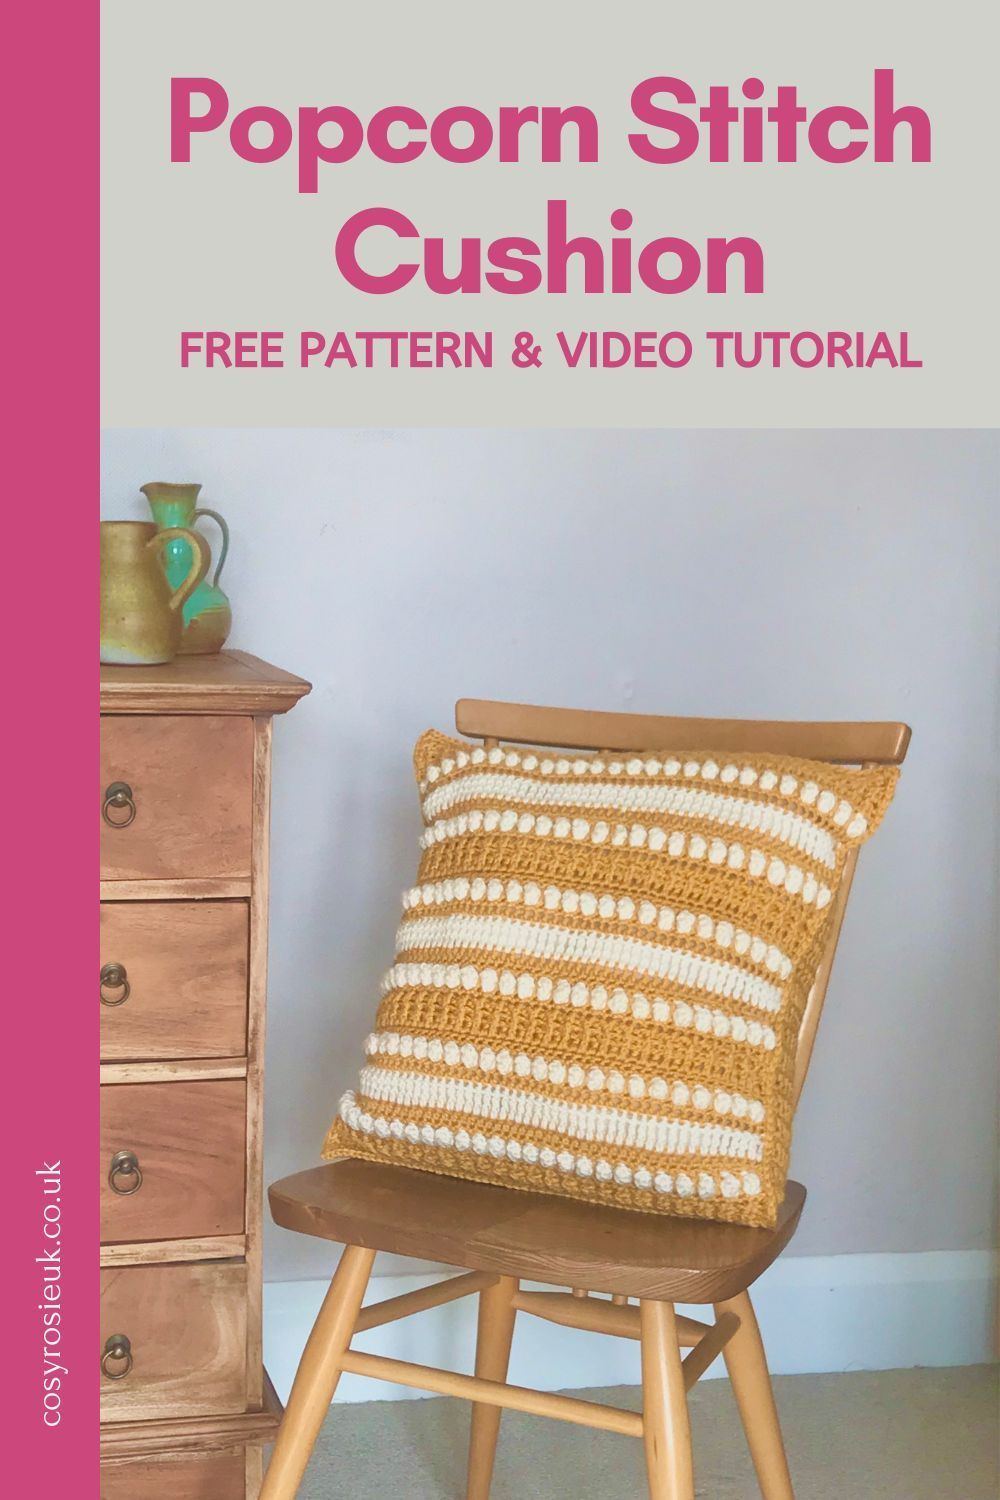 Crochet Popcorn stitch cushion pattern with video tutorial